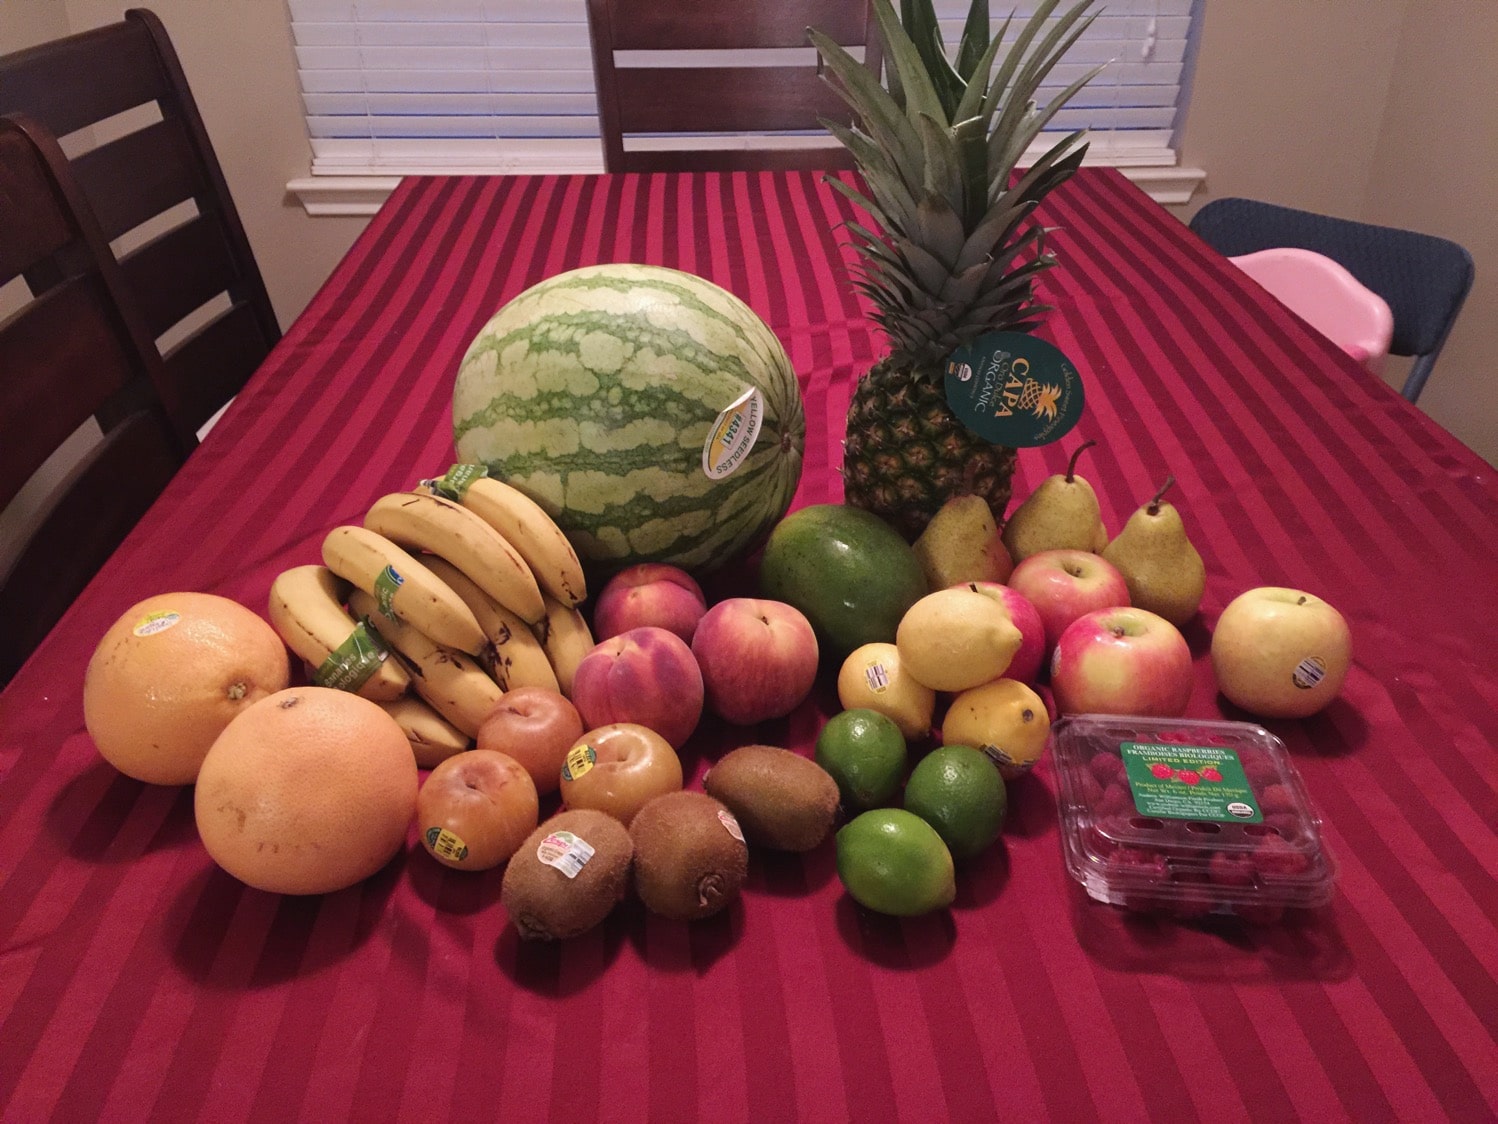 CSA fruits and veggies